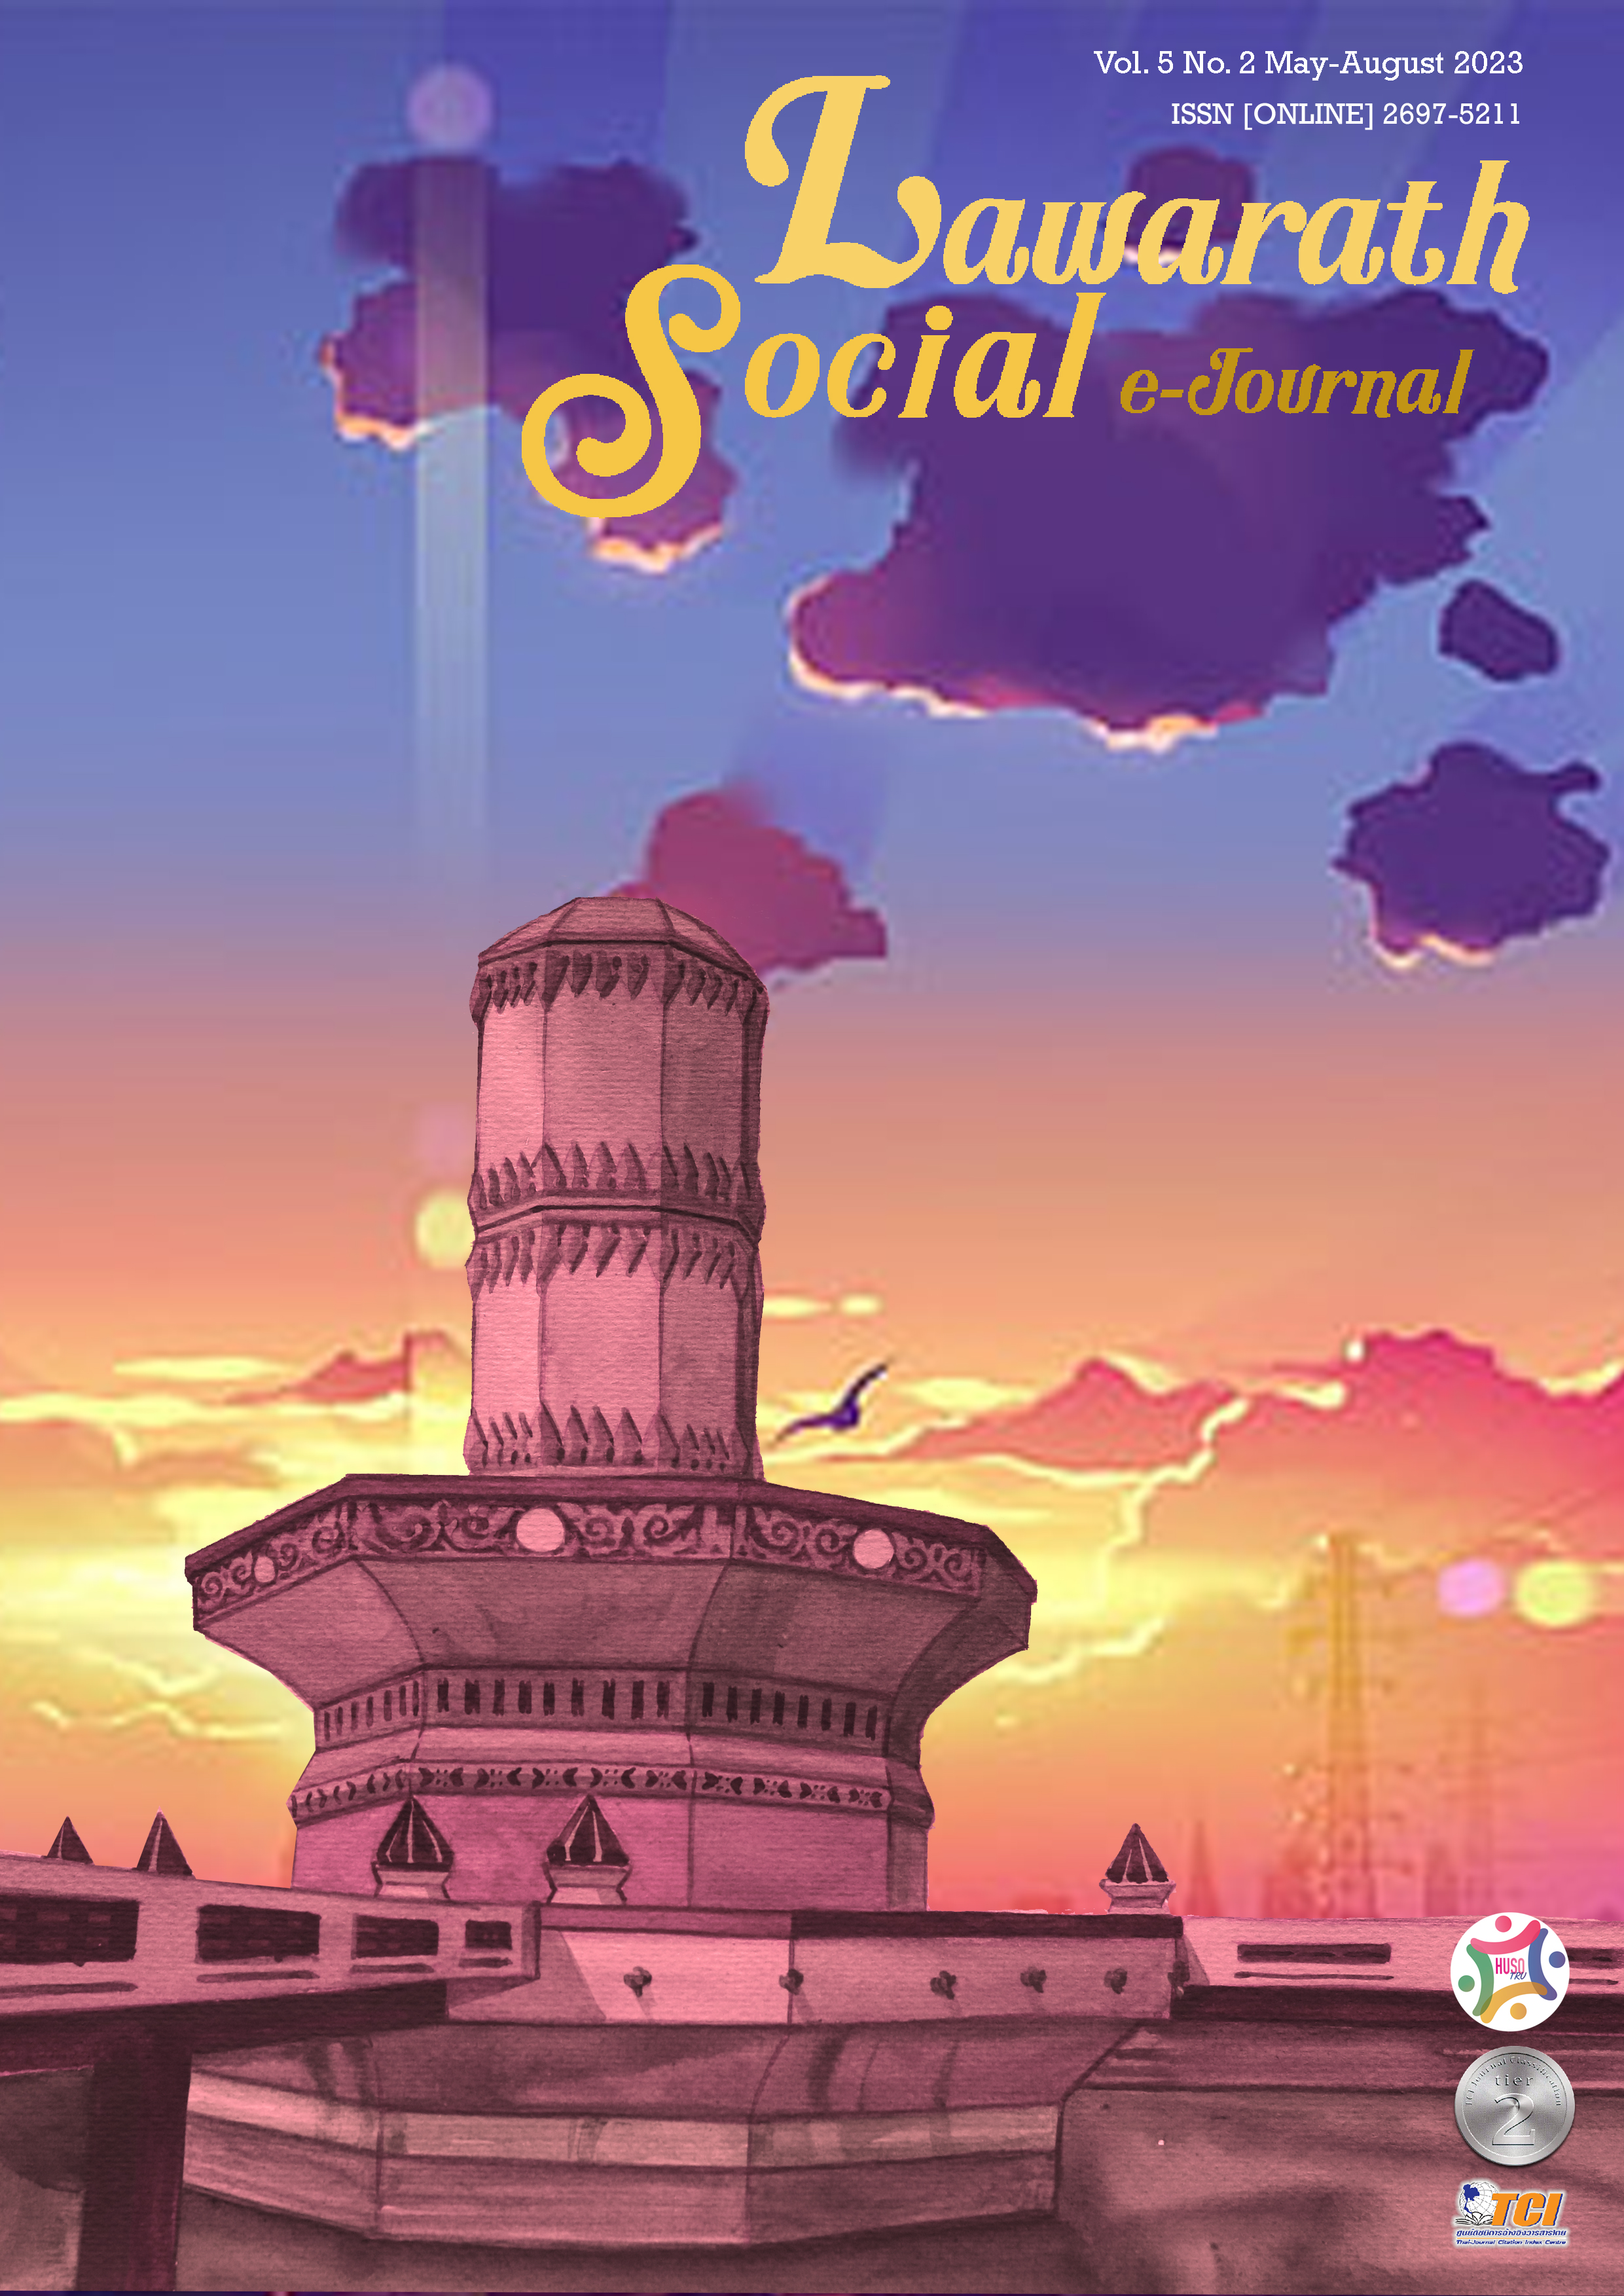 					View Vol. 5 No. 2 (2023): Lawarath Social E-Journal Vol. 5 No. 2 (May - August 2023)
				